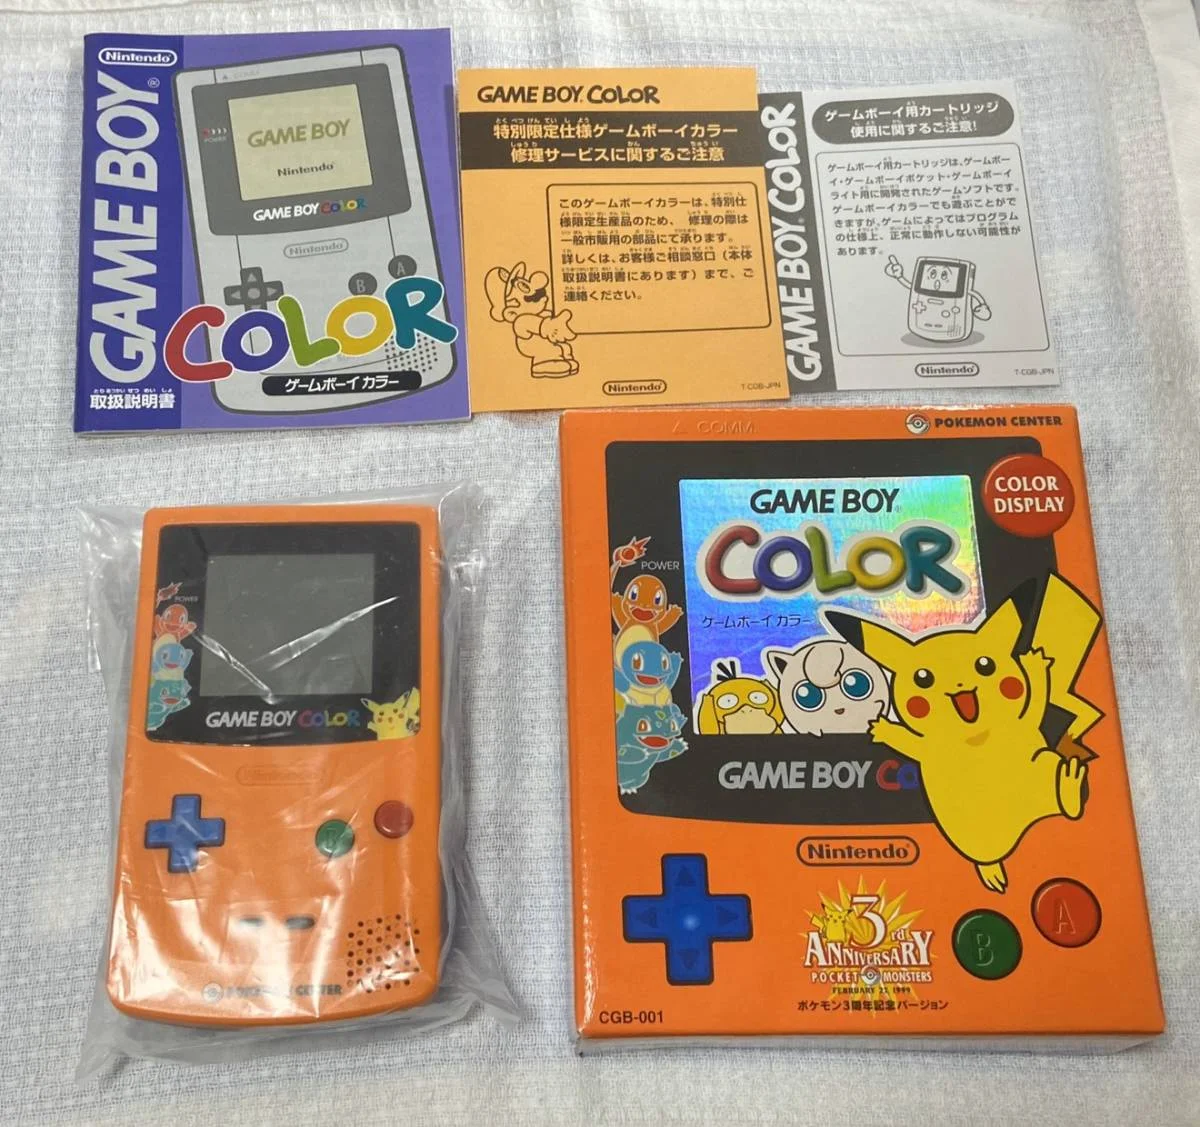  Nintendo Game Boy Color Pokemon Center 3rd Anniversary Console